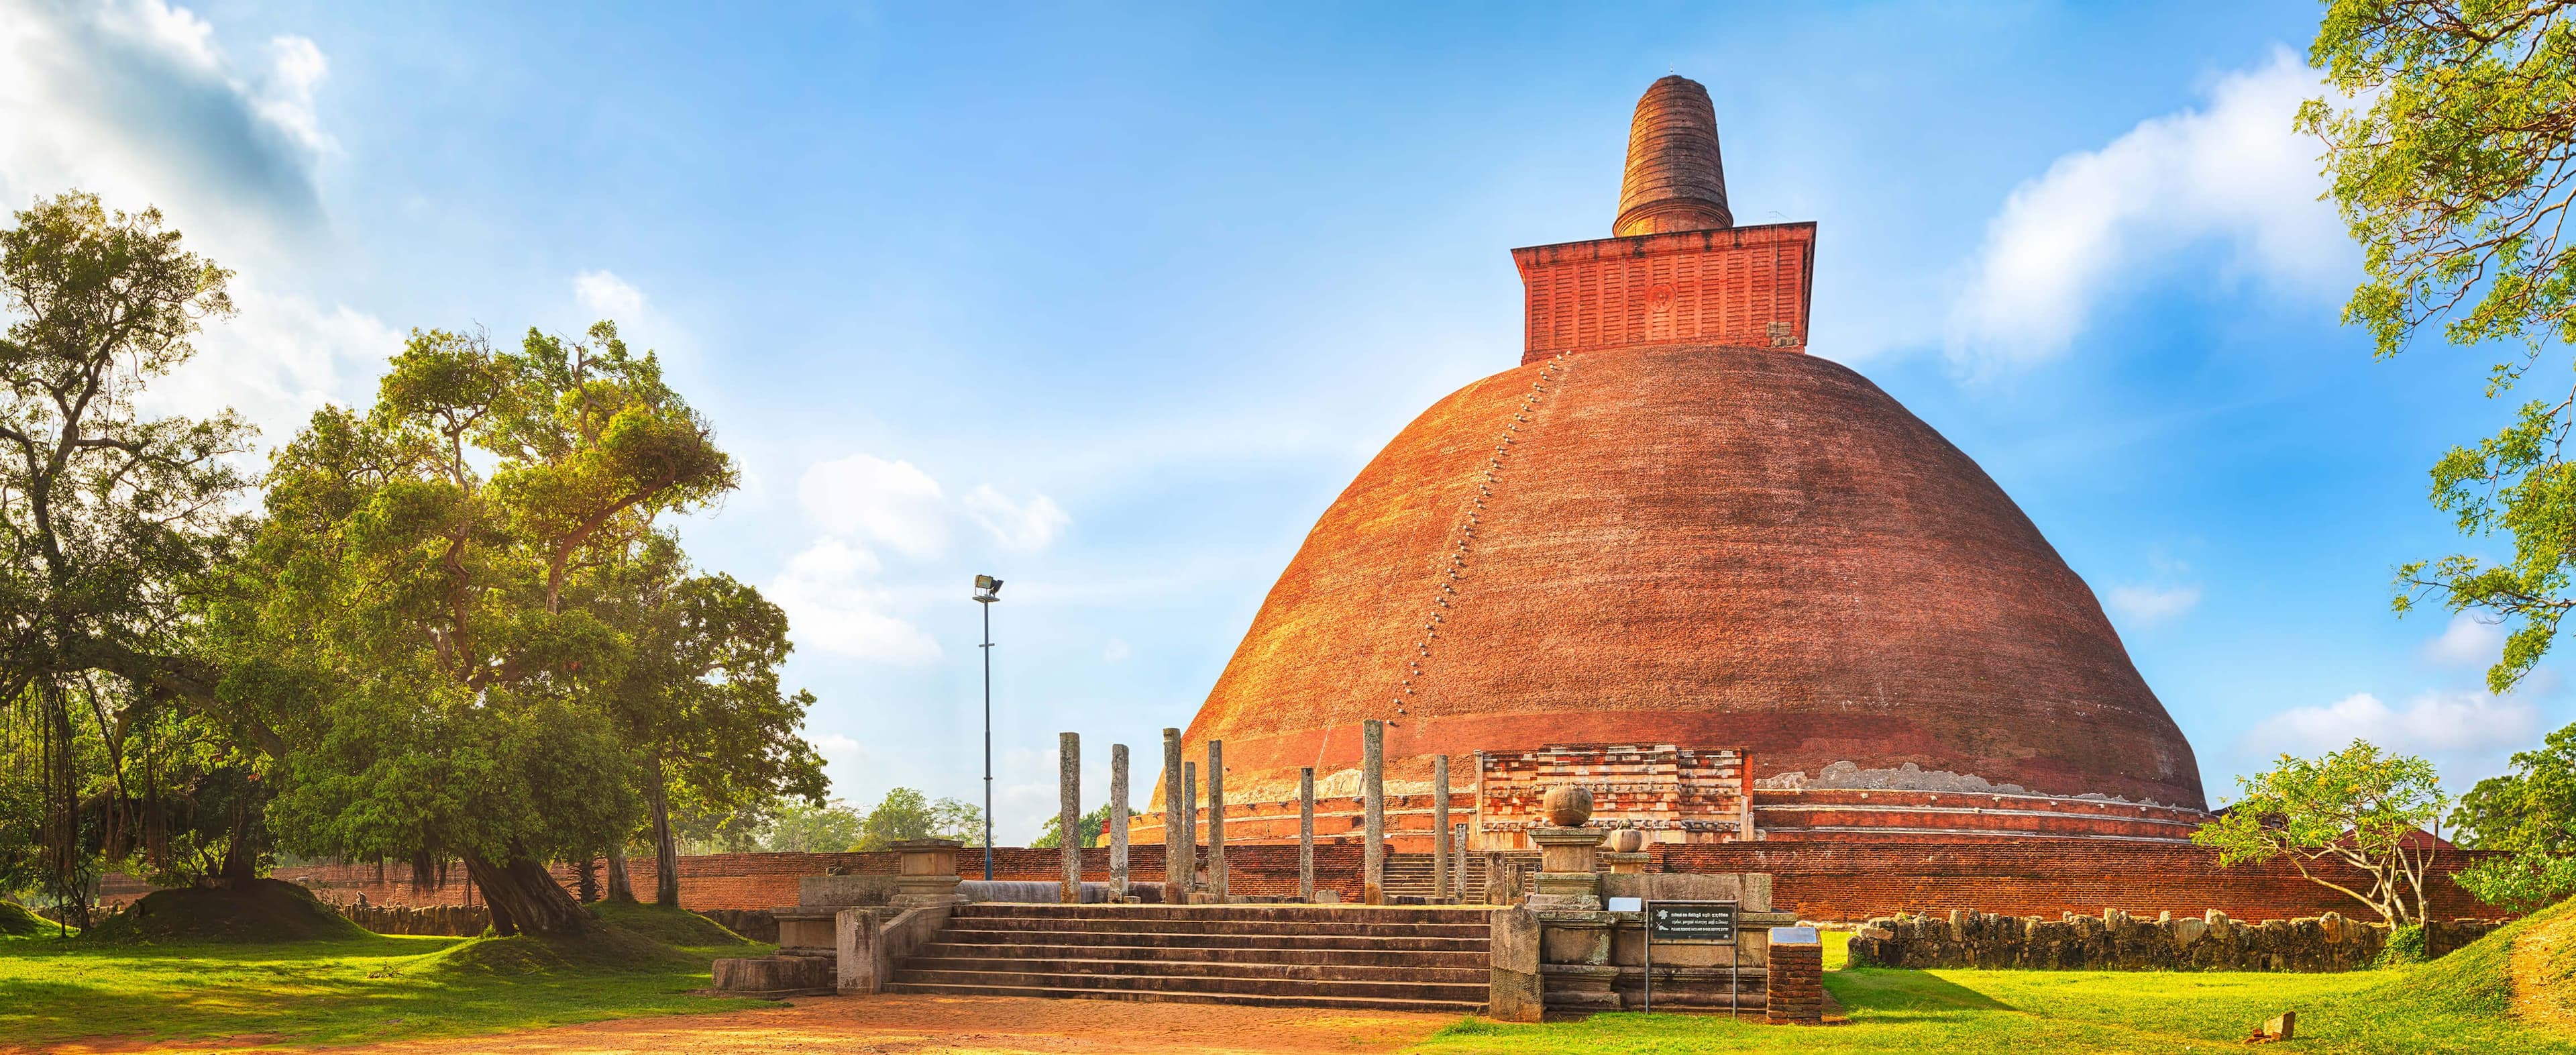 Jetavanaramaya dagoba في أنقاض Anuradhapura ، سريلانكا.